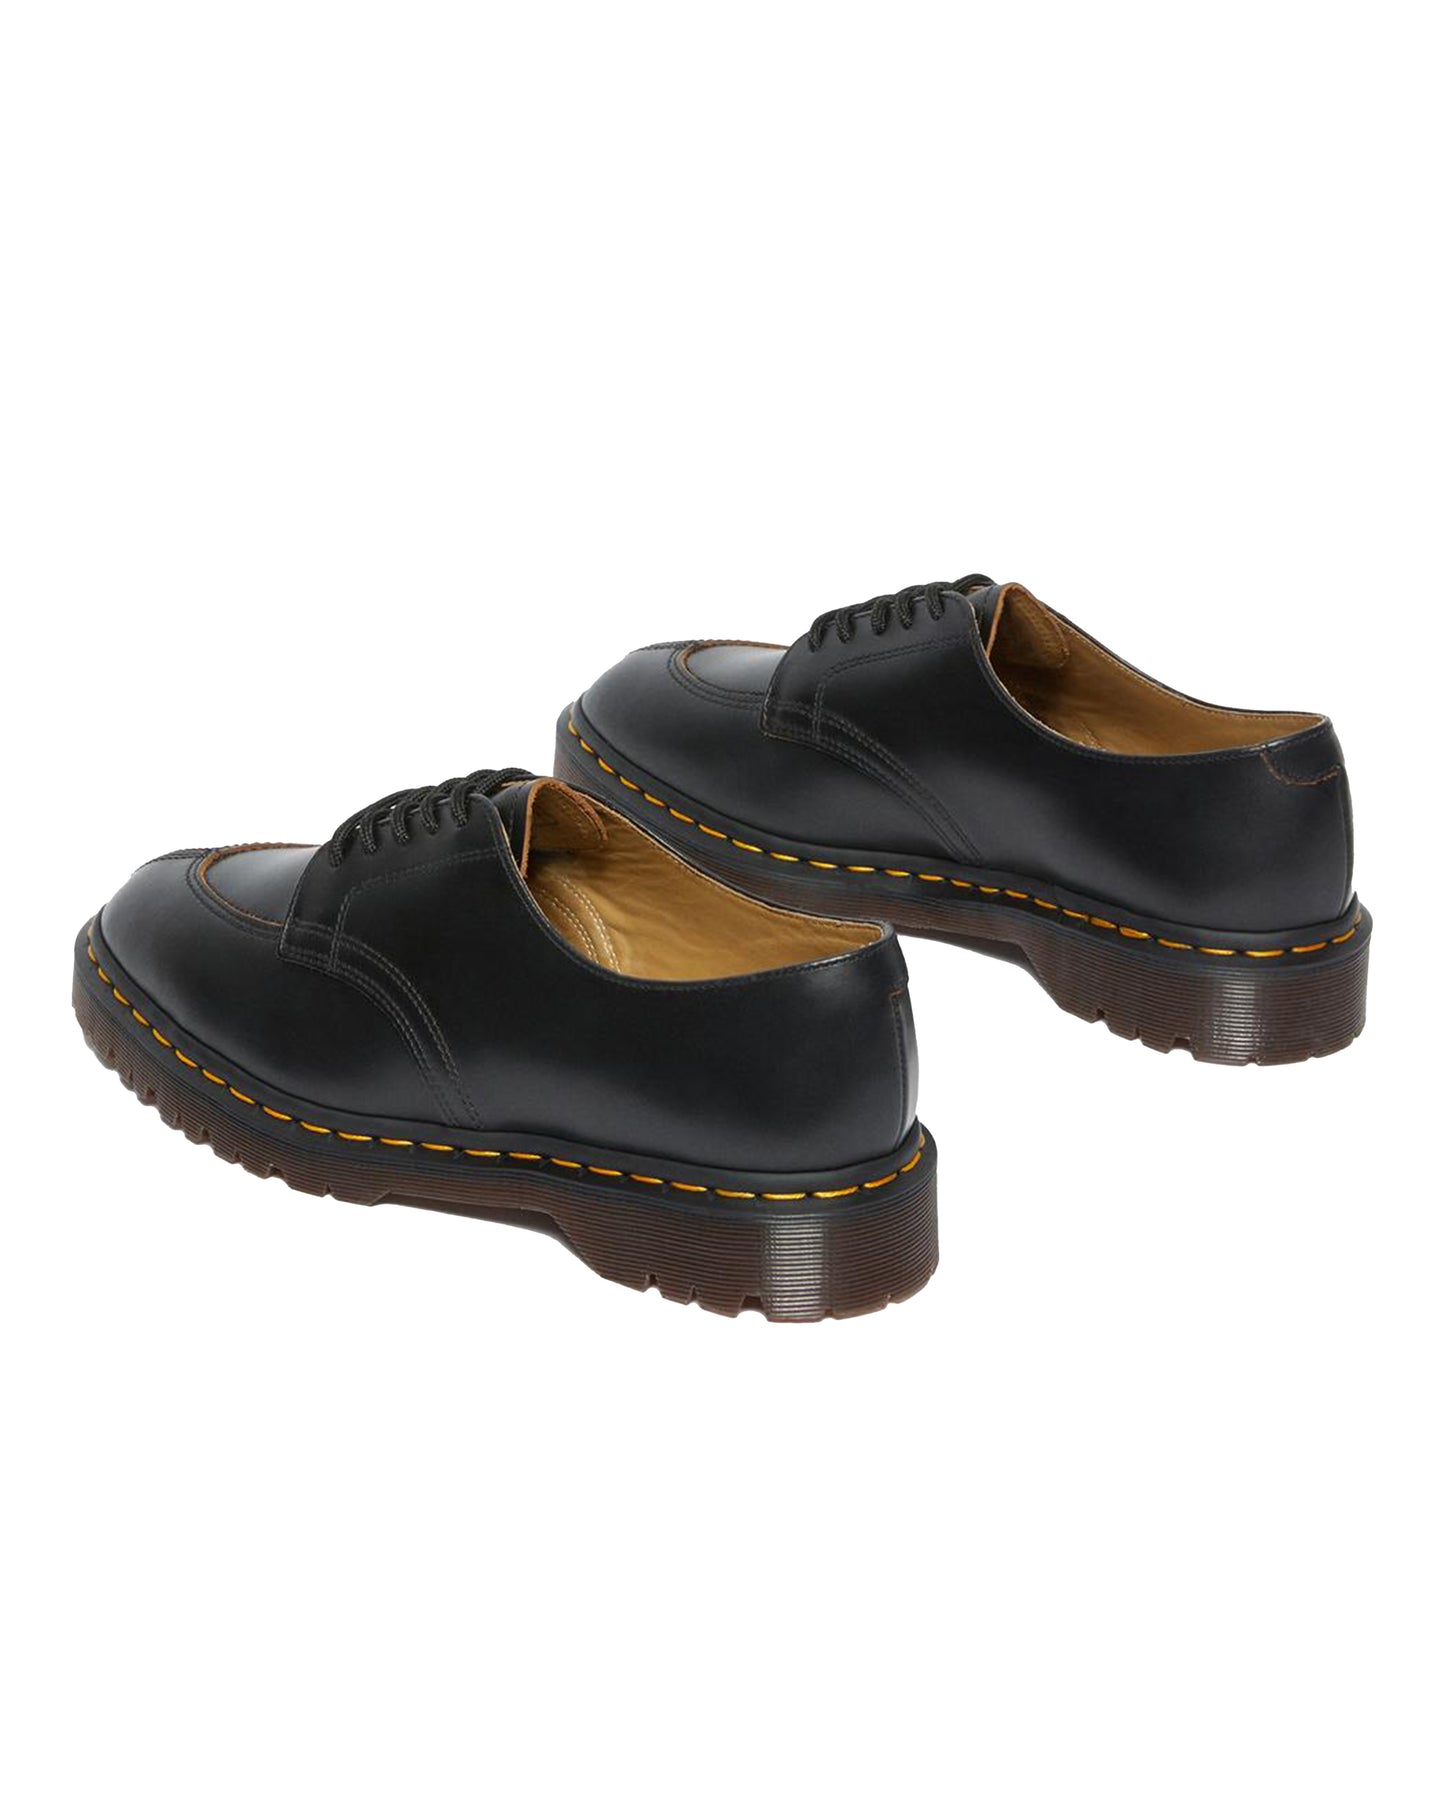 
                    
                      Dr Martens 2046 Vintage Smooth Leather Oxford Shoes
                    
                  